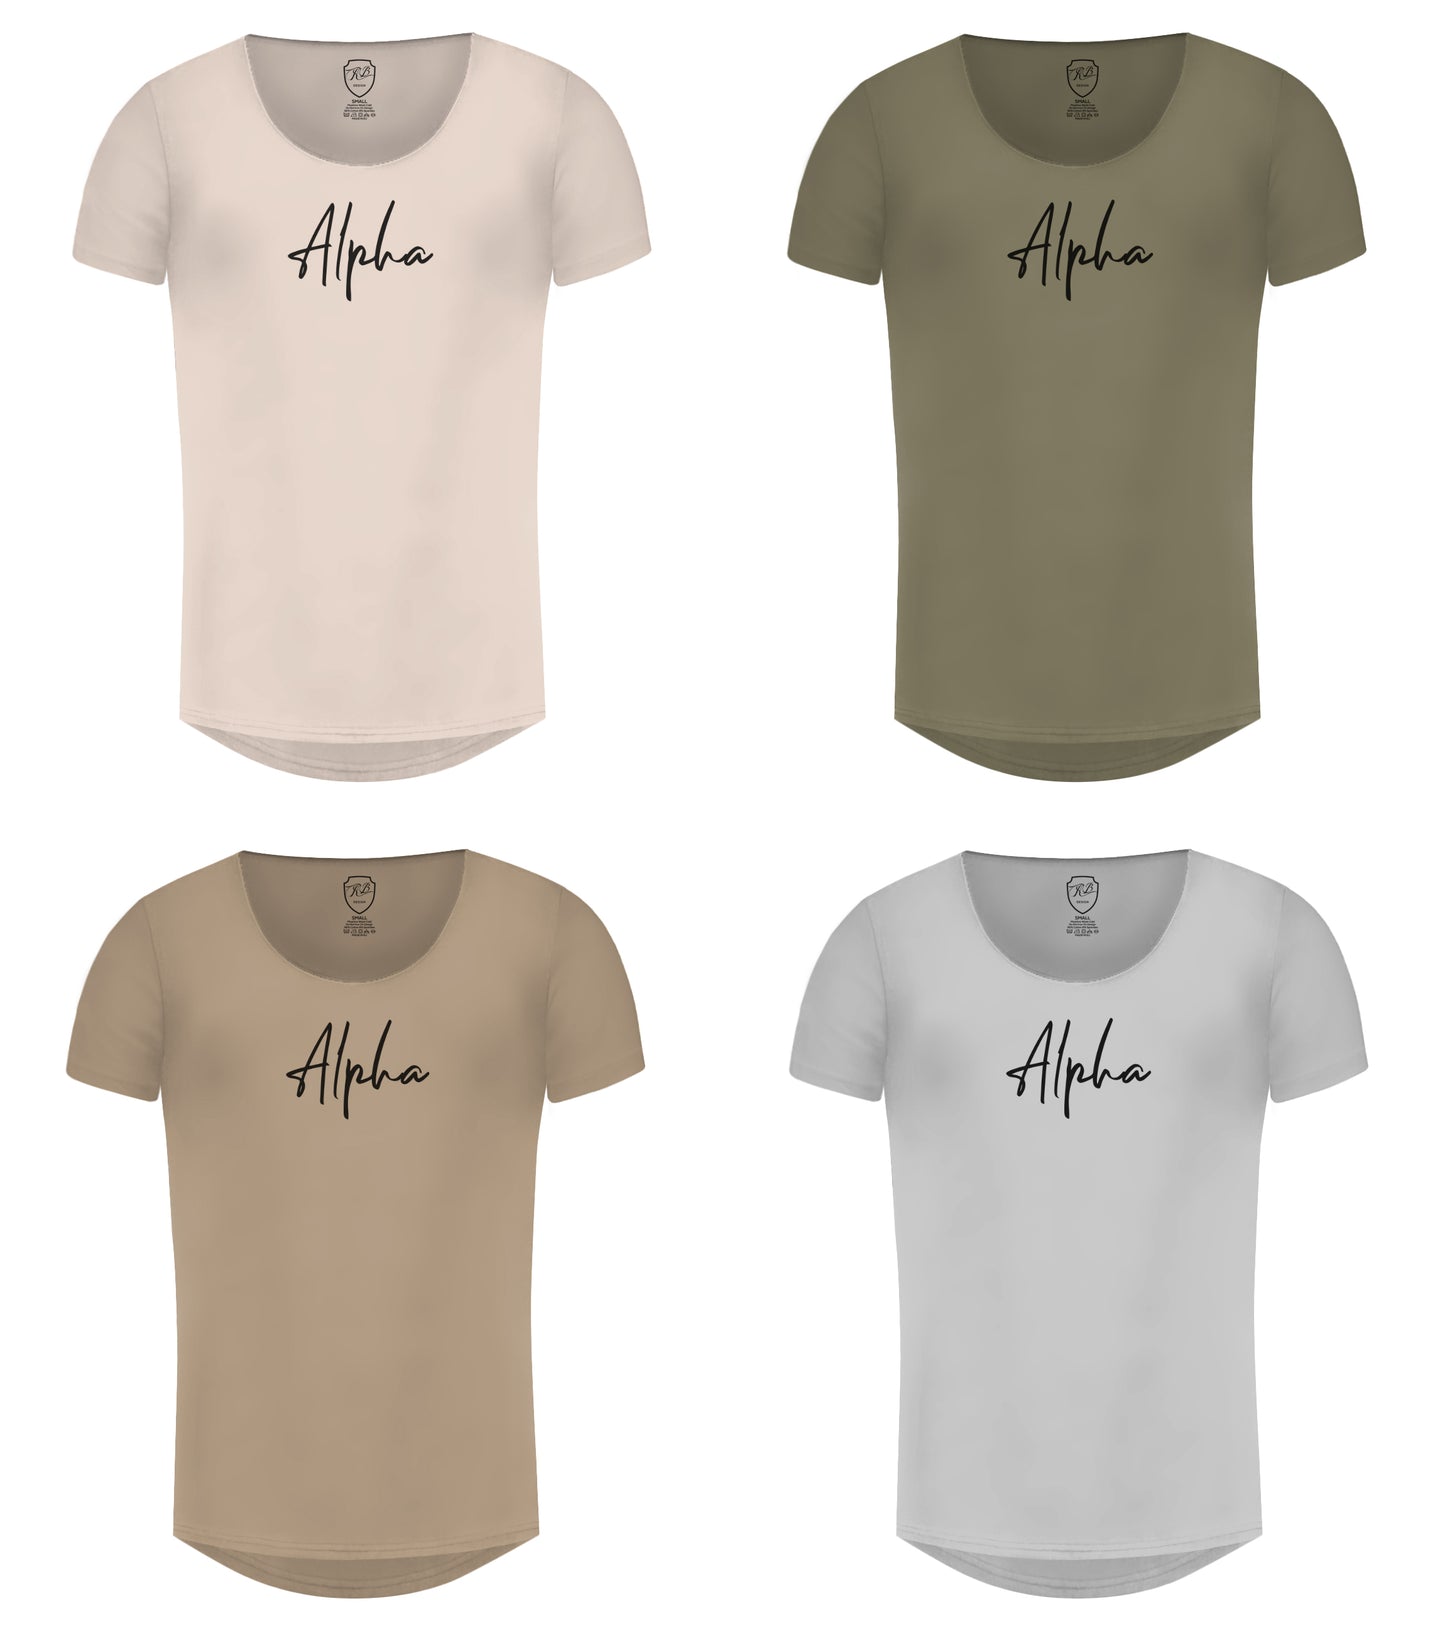 Men's T-shirt Alpha MD948